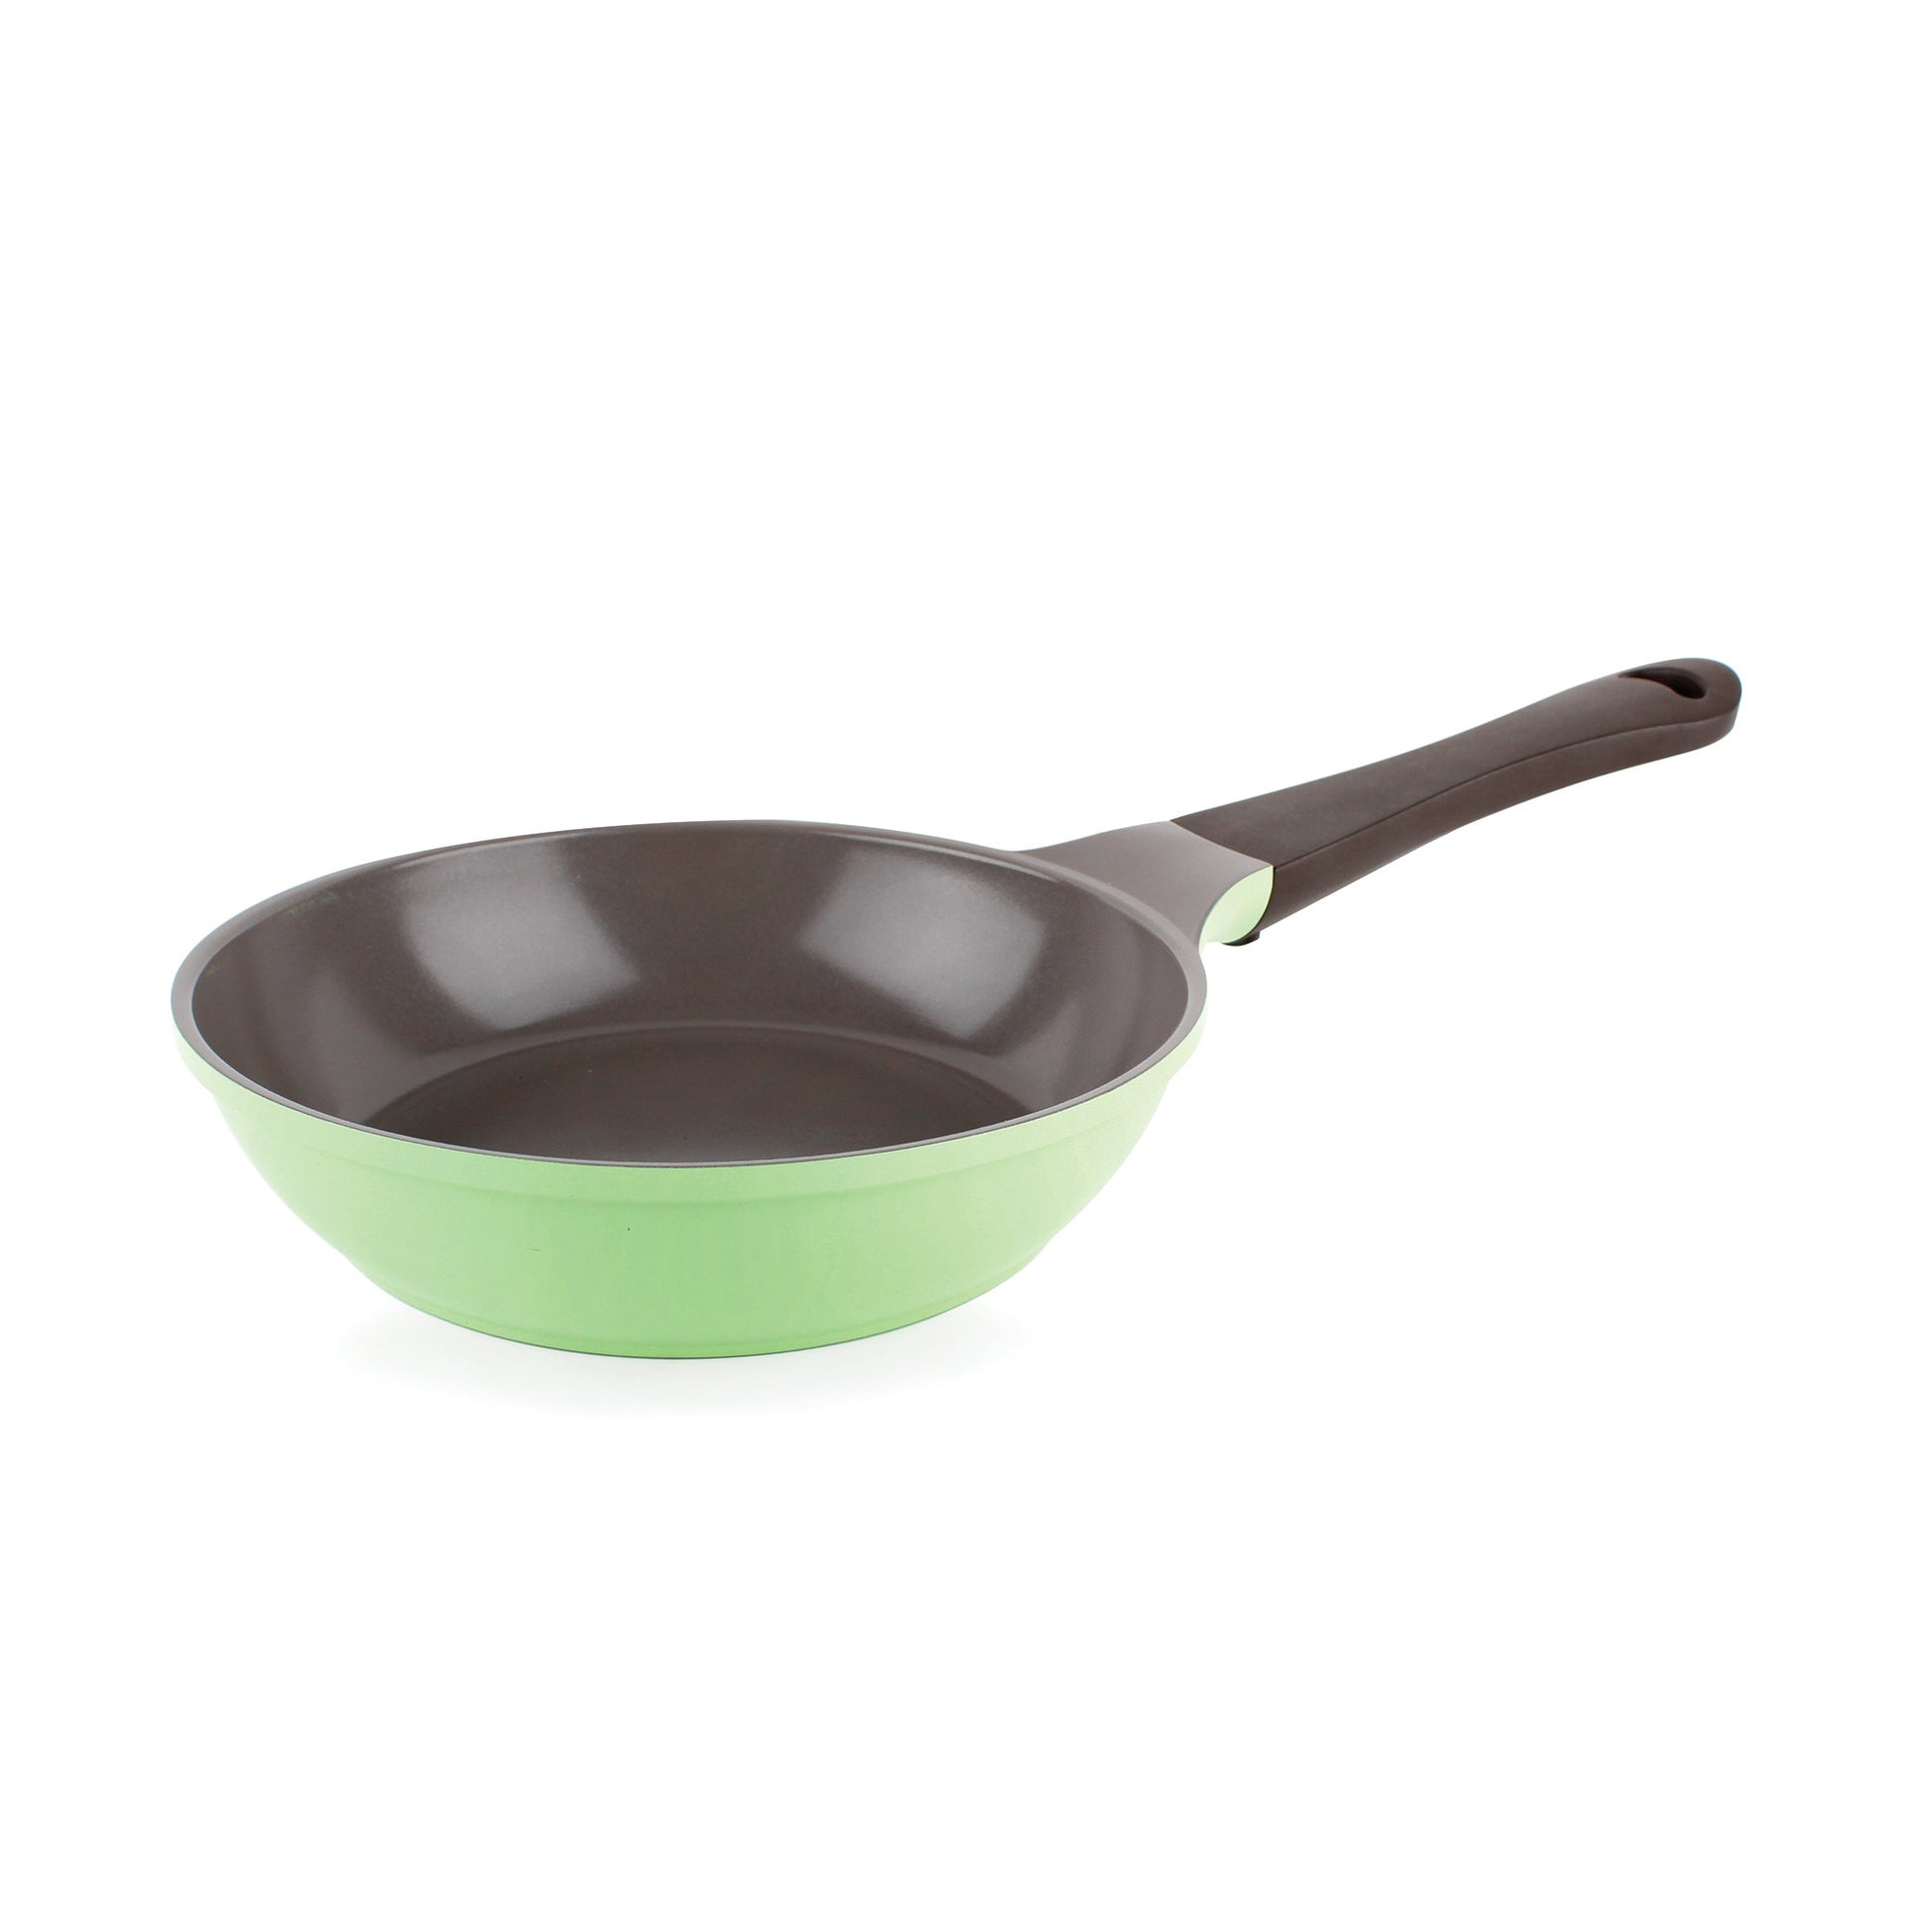 Neoflam Eela Ceramic Nonstick Fry Pan in Apple Green